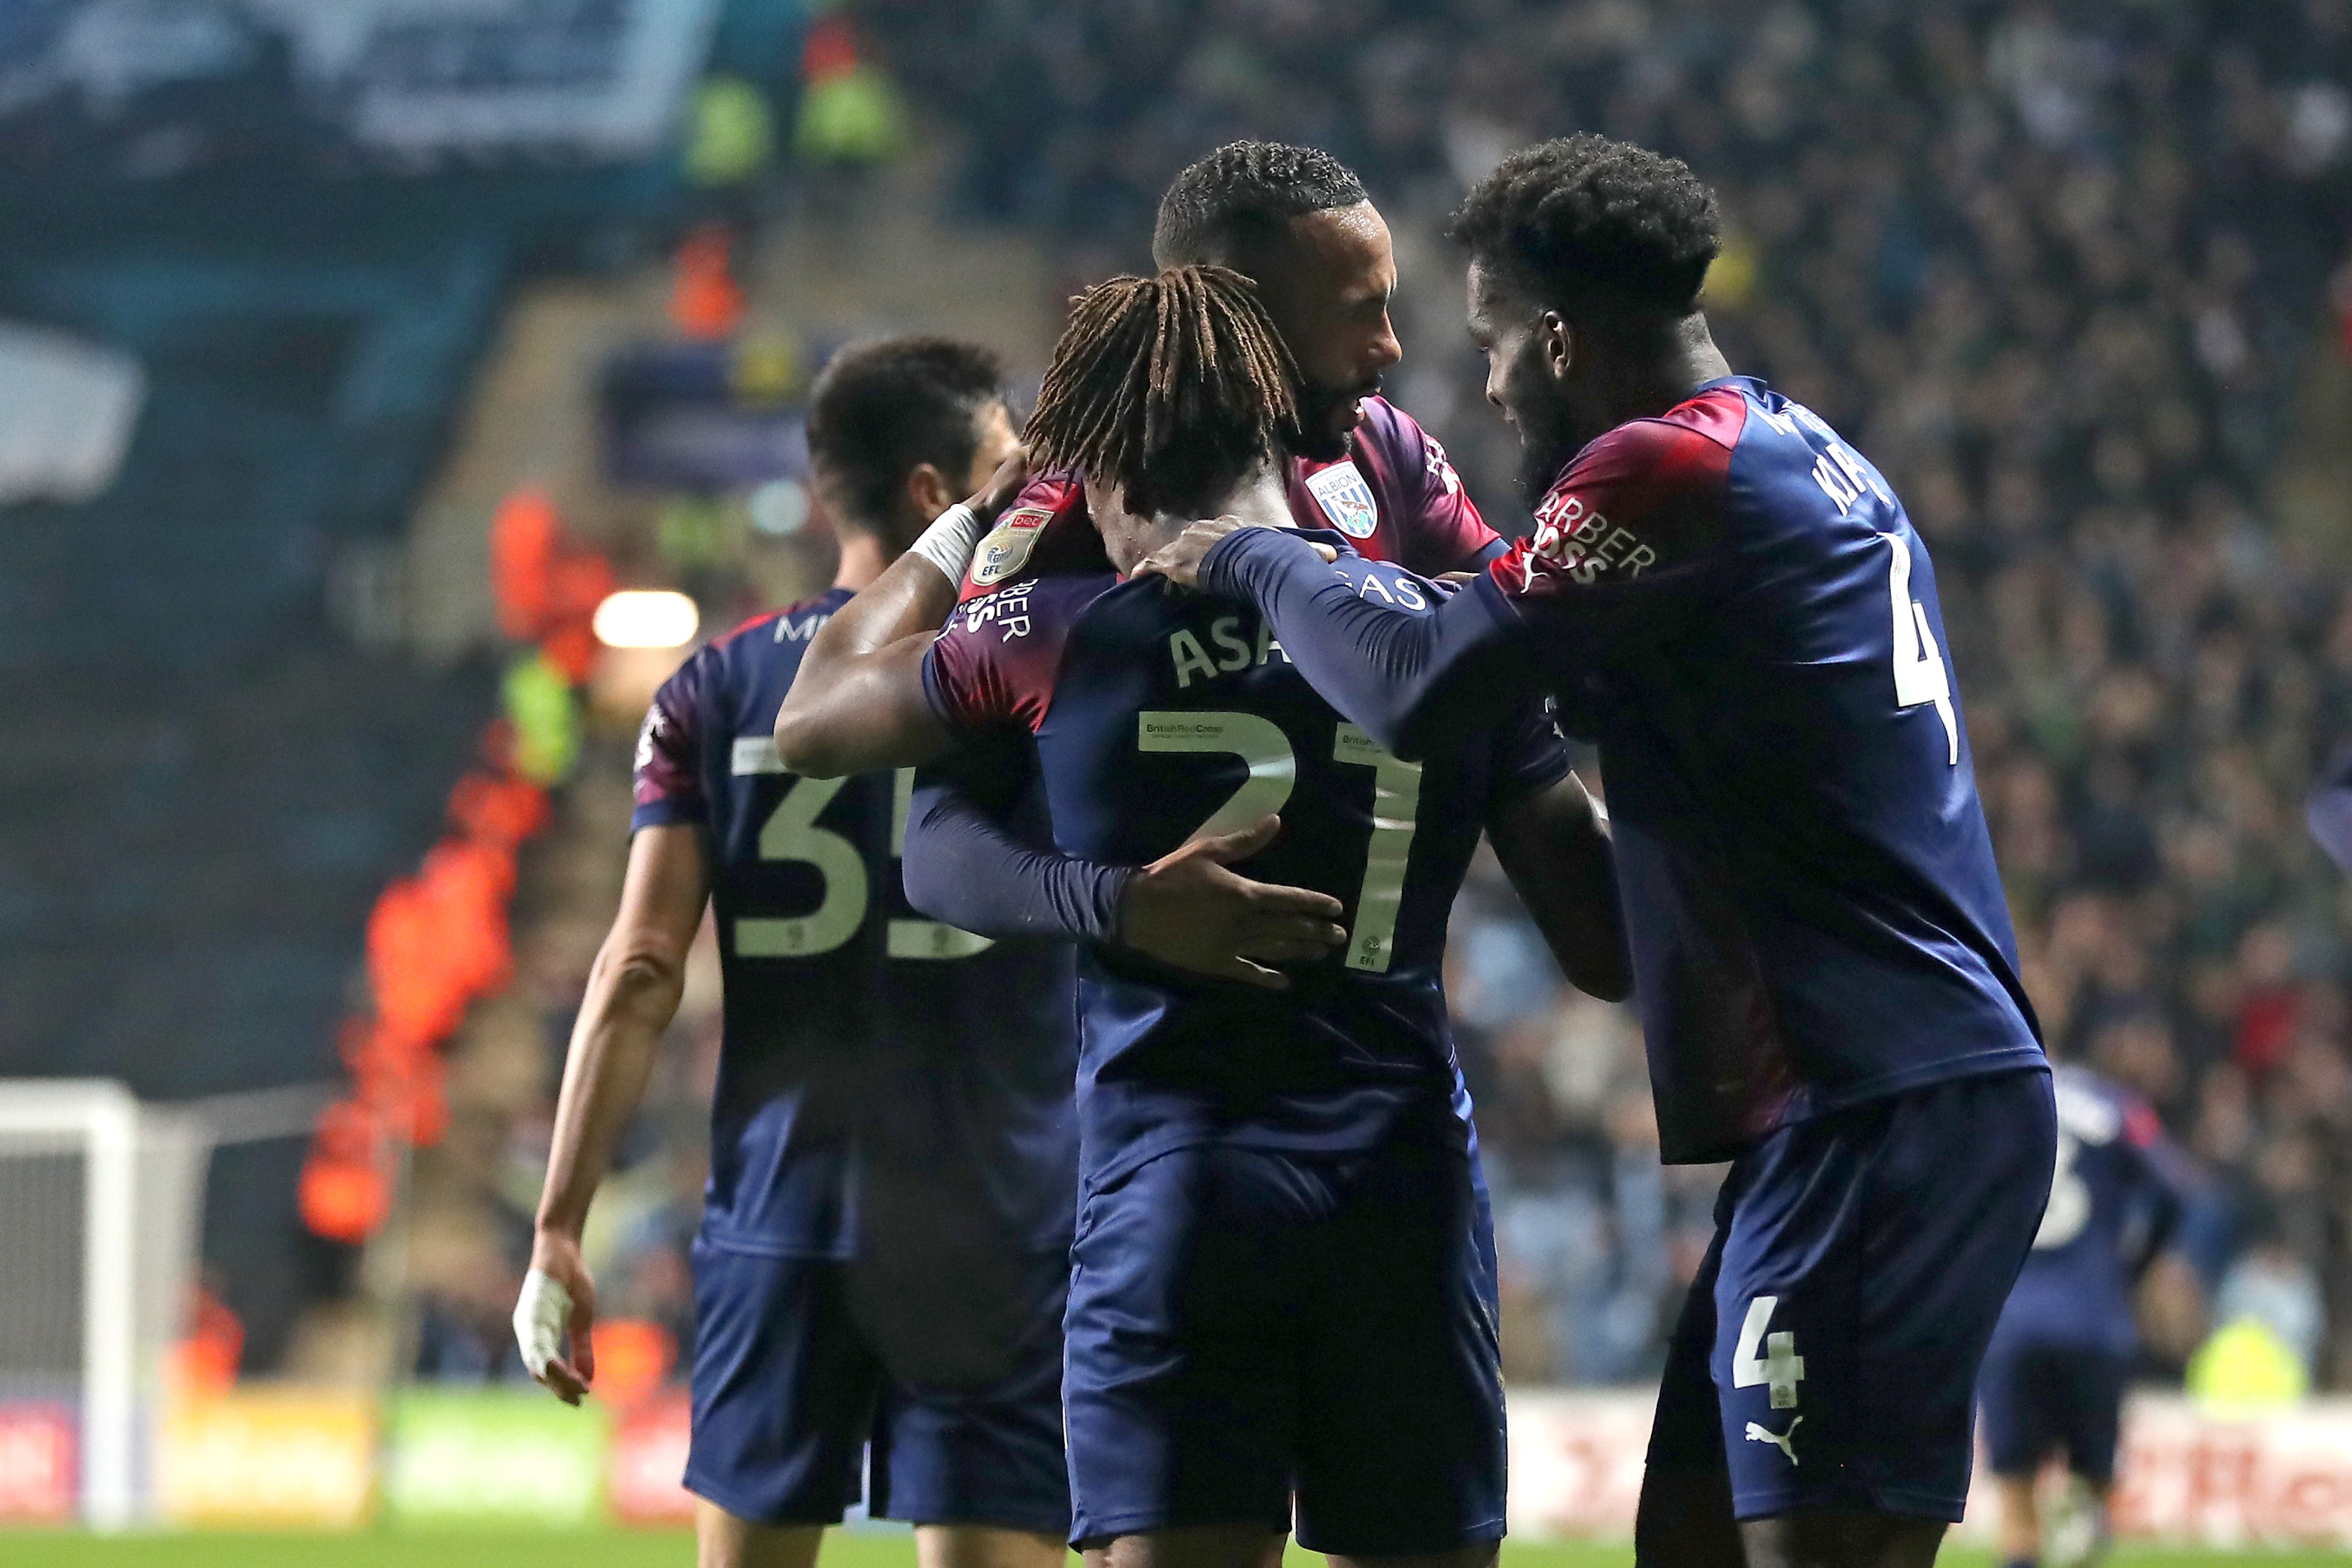 Brandon Thomas-Asante celebrates scoring against Coventry City with his team-mates